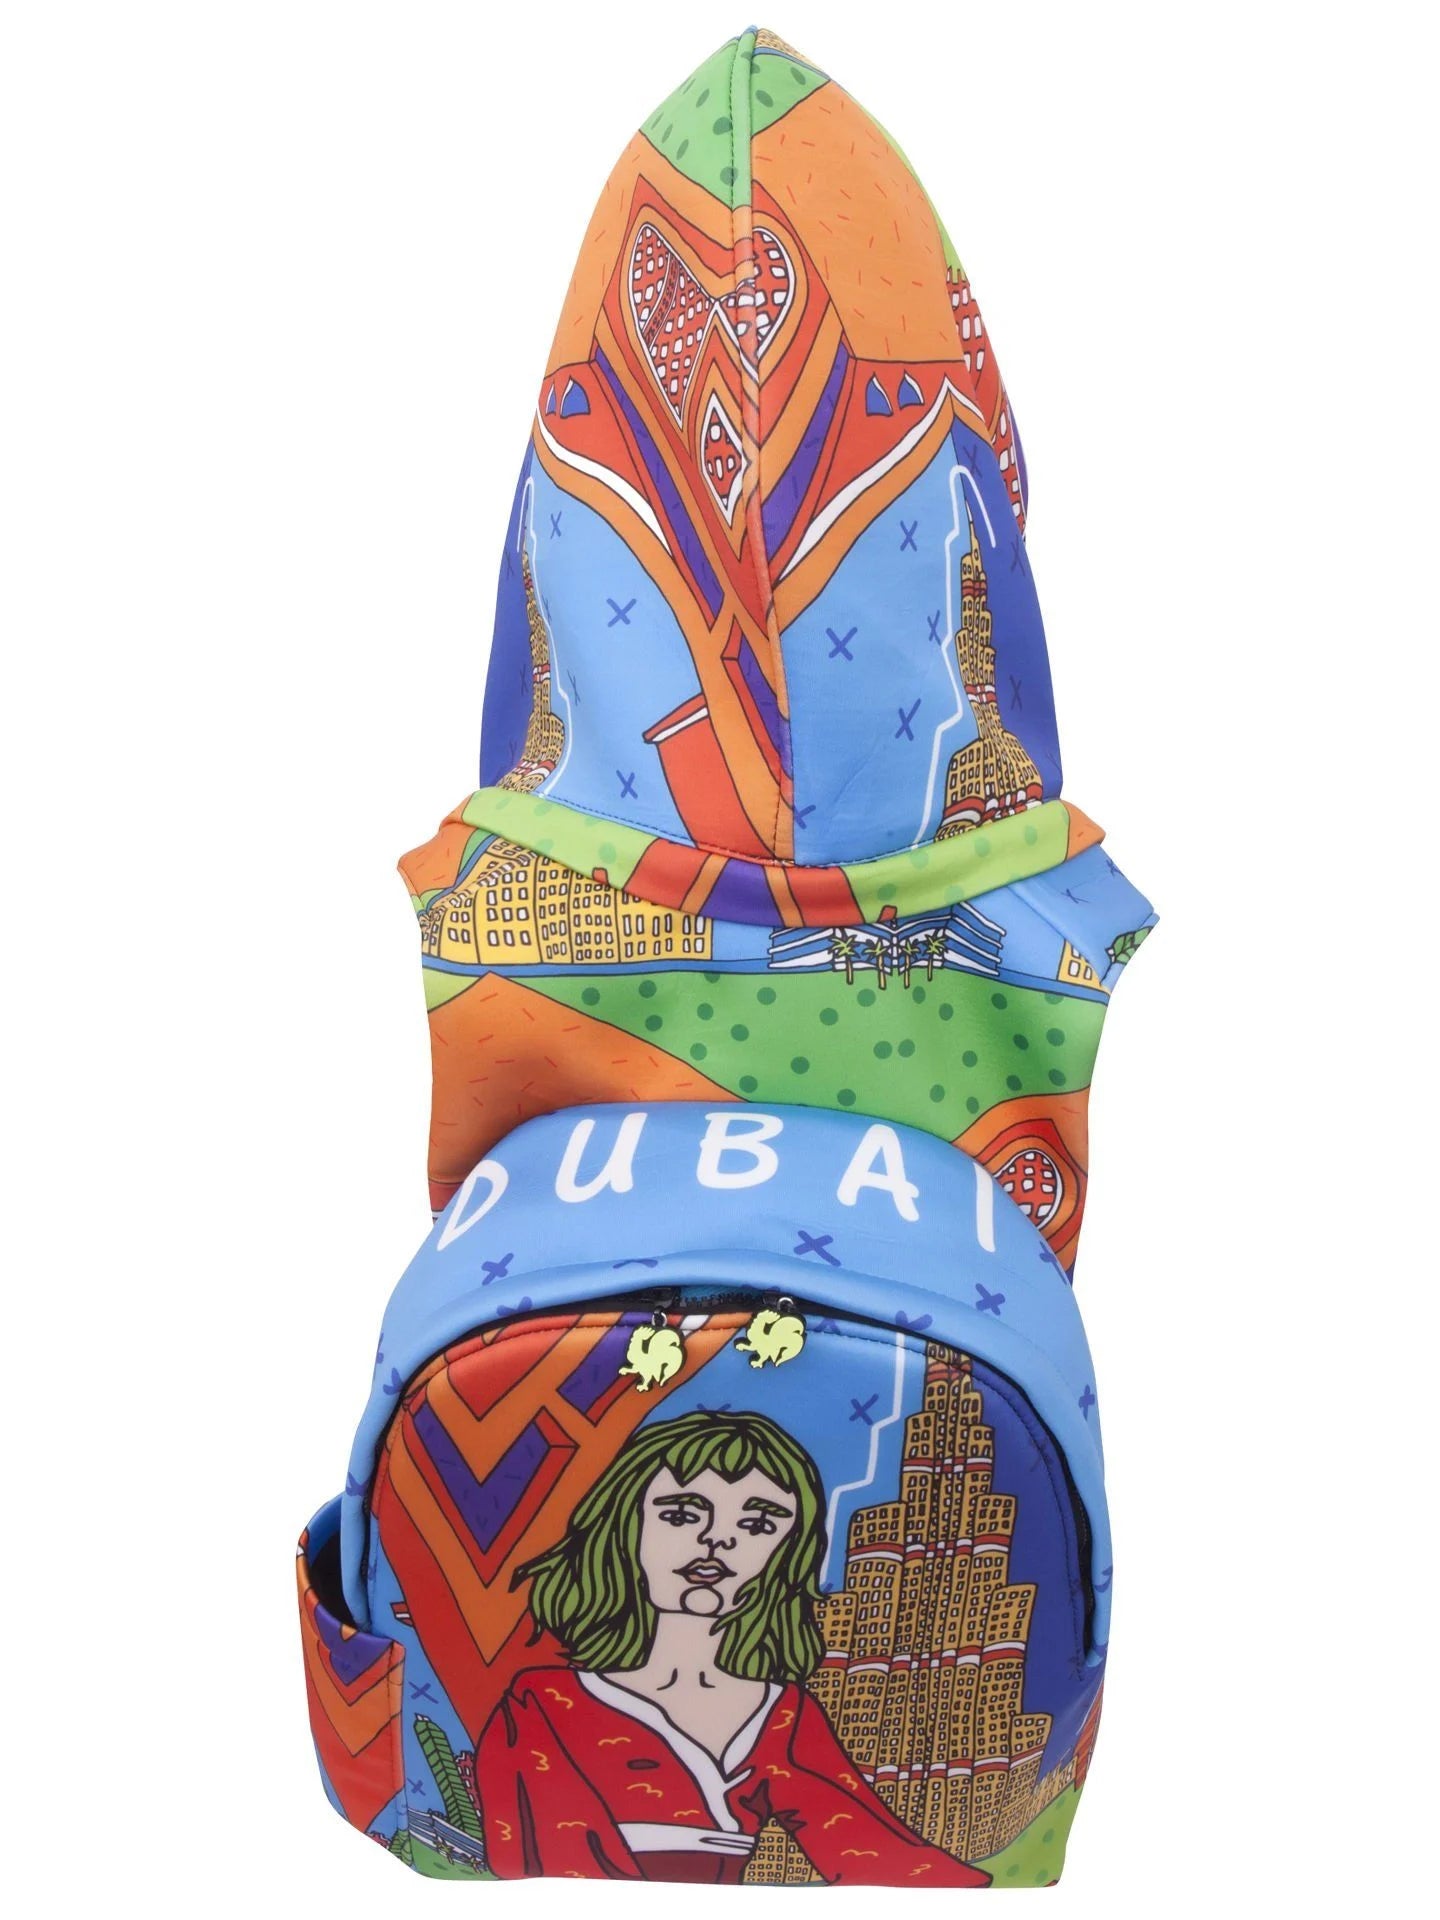 Morikukko City Collection Dubai Hooded Backpack